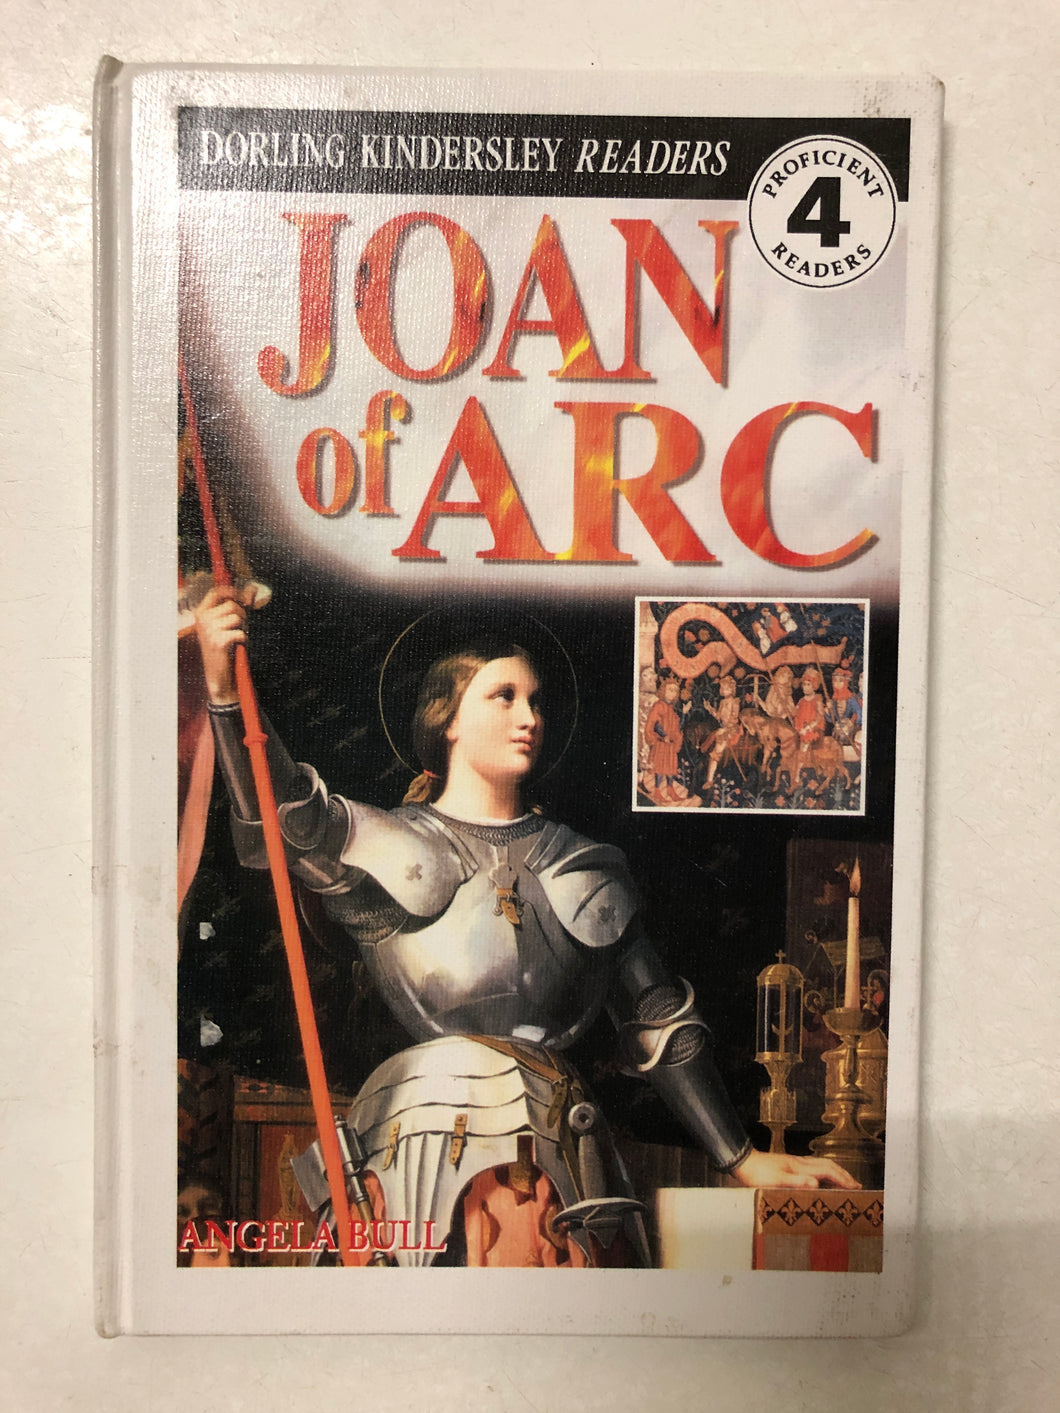 Joan of Arc - Slick Cat Books 